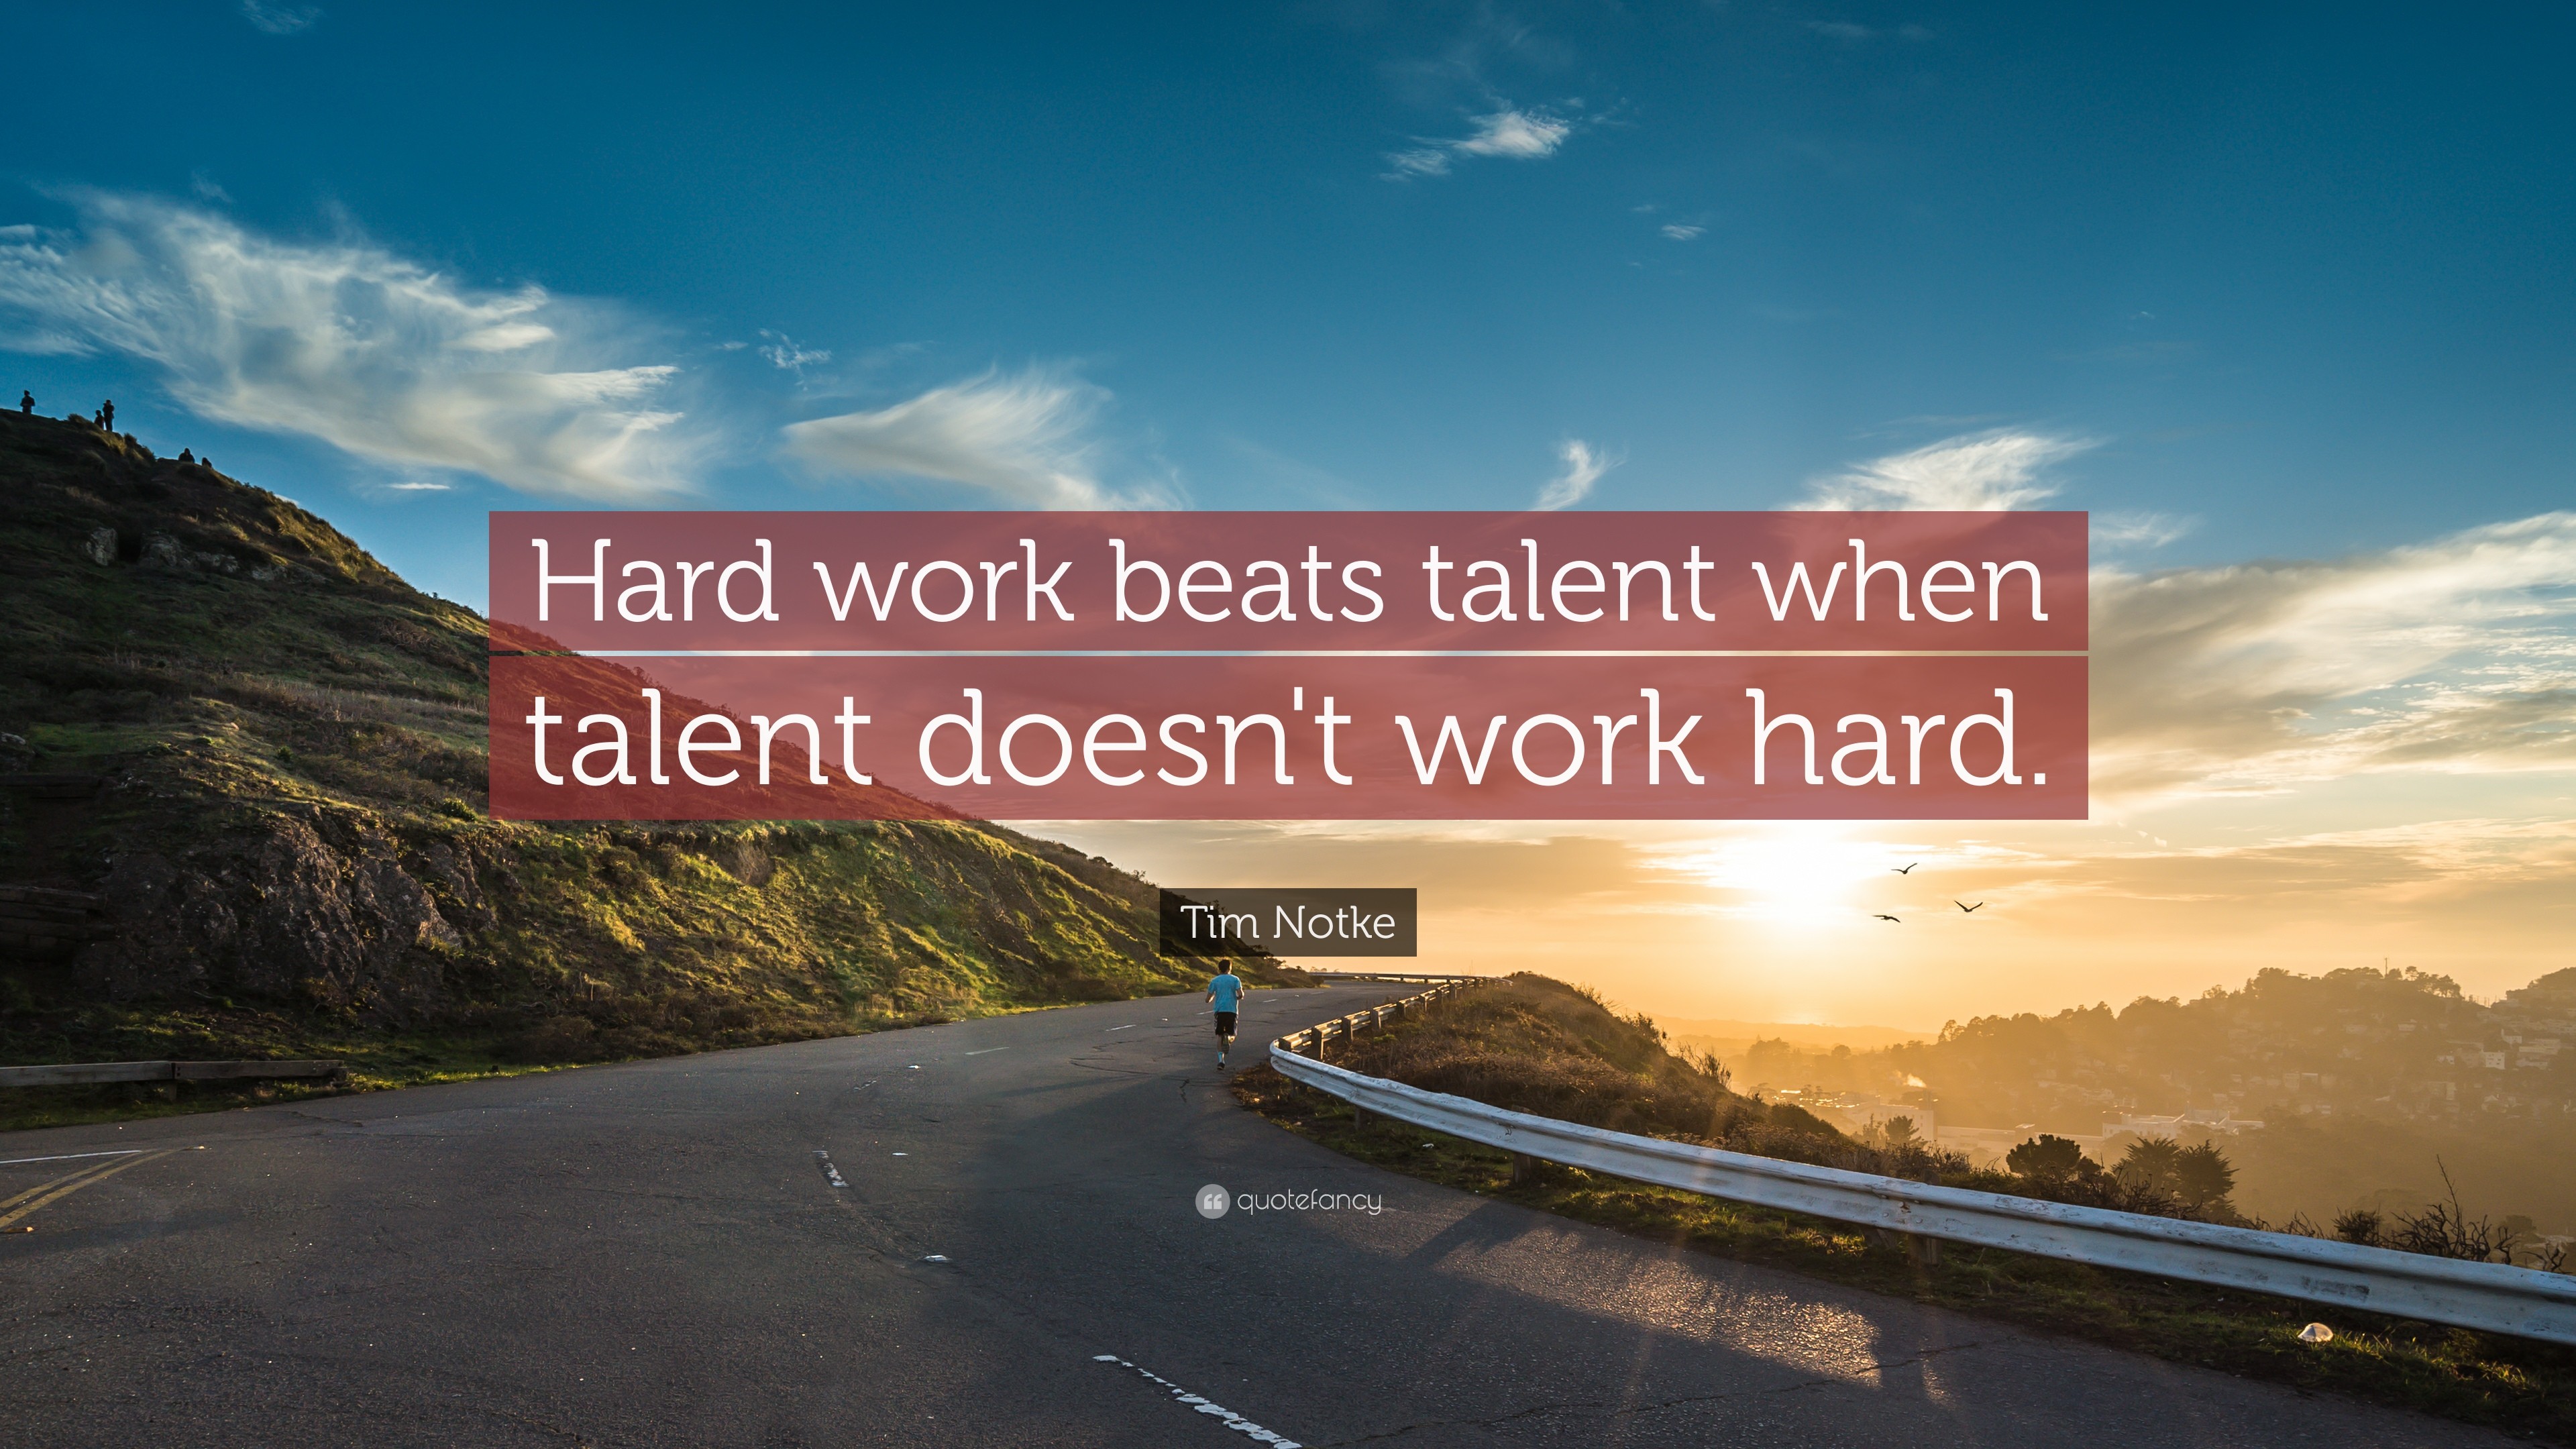 3840x2160 Tim Notke Quote: “Hard work beats talent when talent doesnt work .